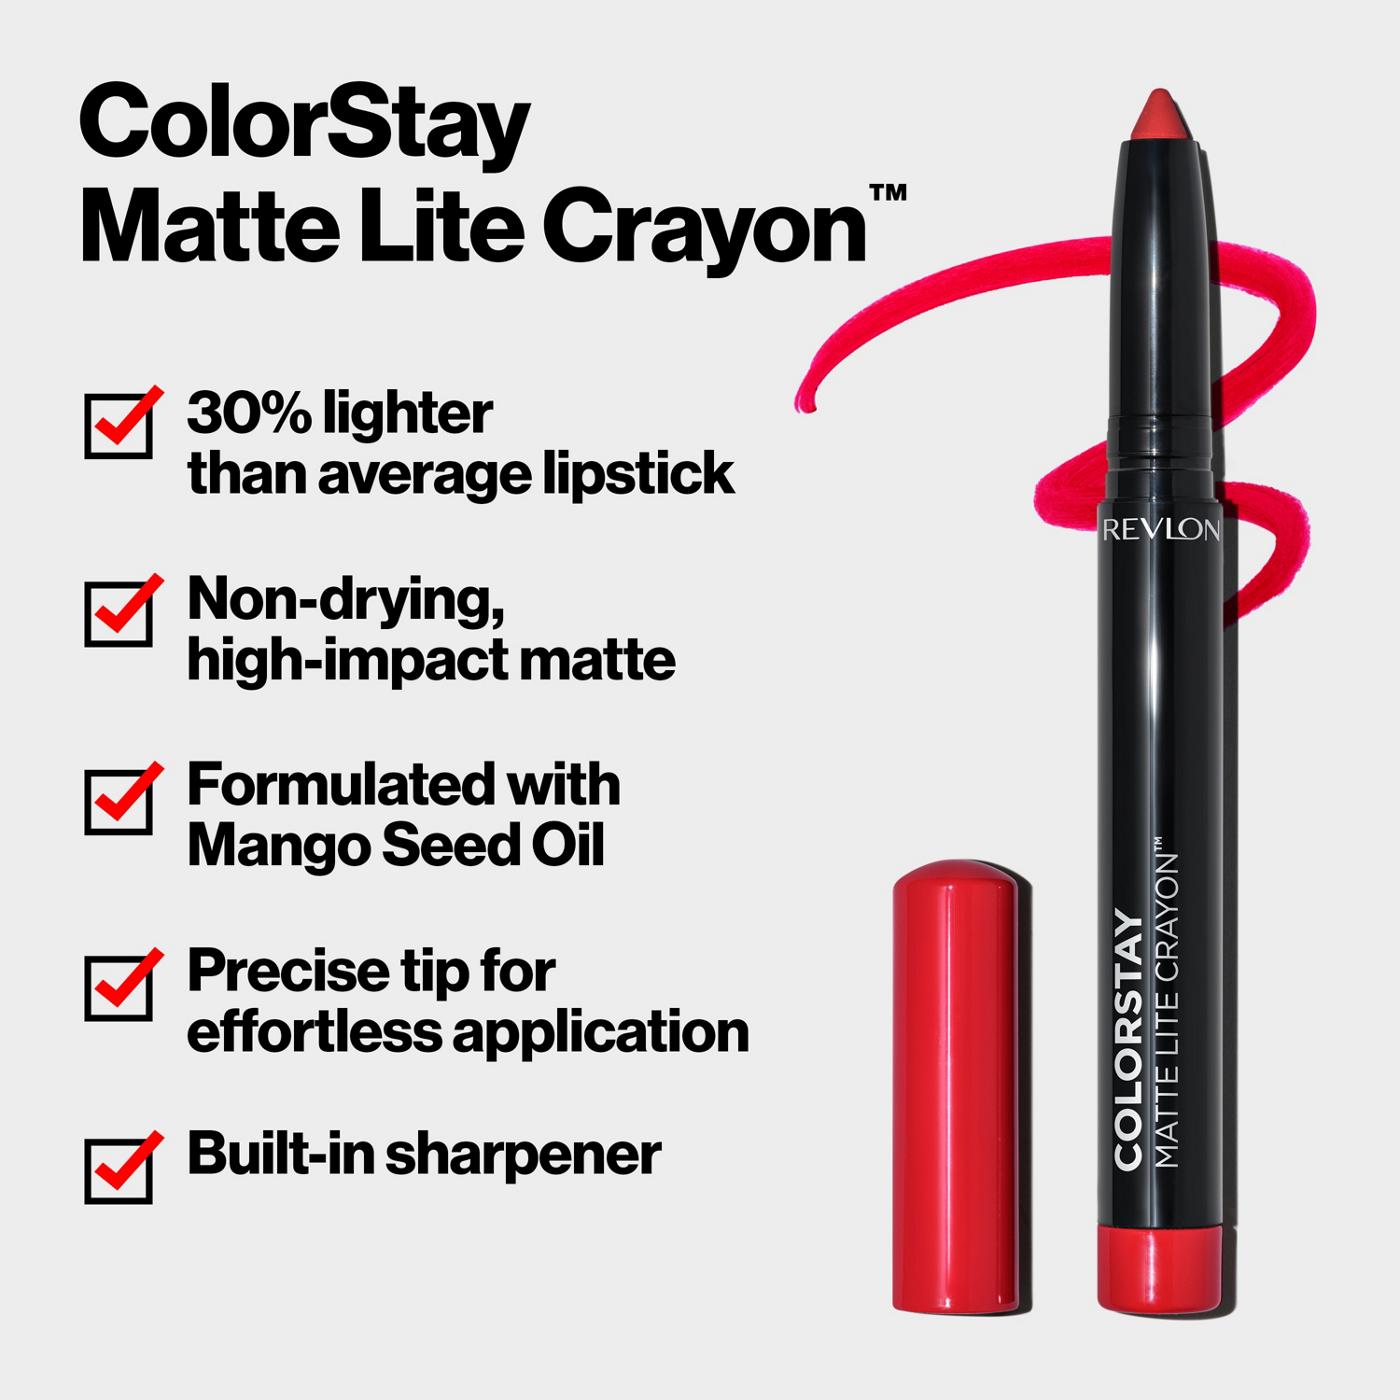 Revlon ColorStay Matte Lite Crayon Lipstick - Tread Lightly; image 2 of 7